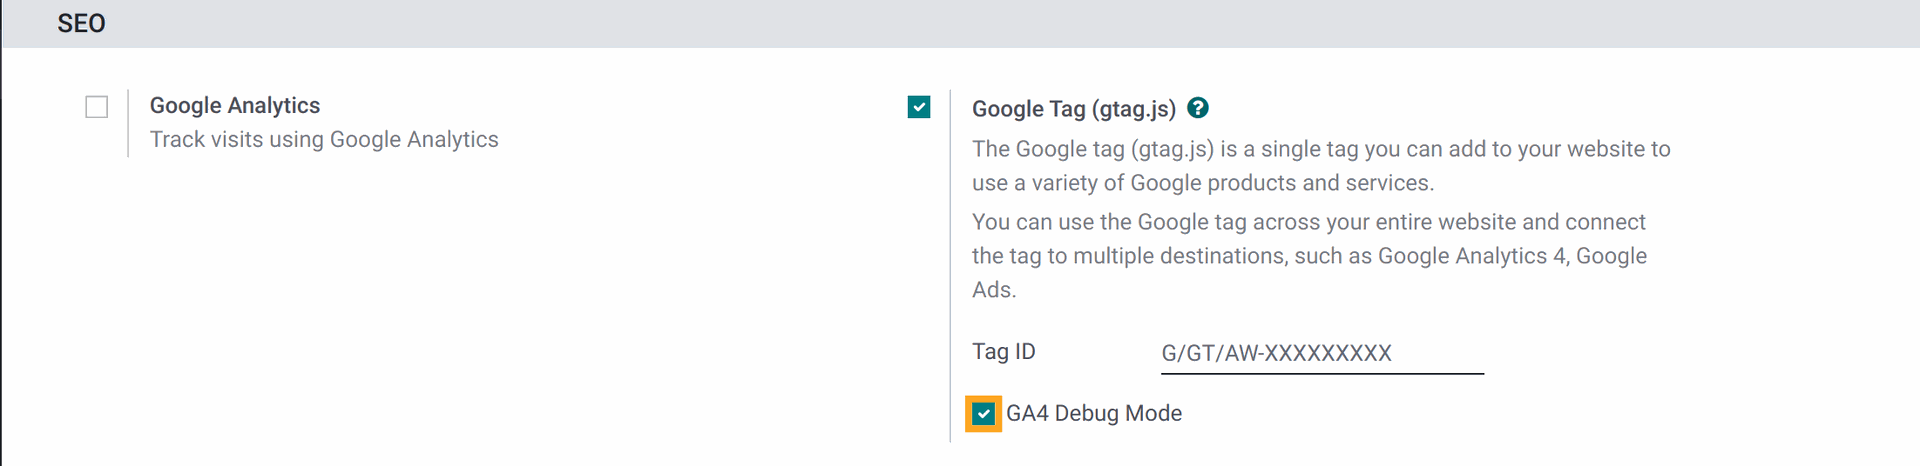 Odoo GA4 Google Analytics 4 Debug Mode setting in 16.0